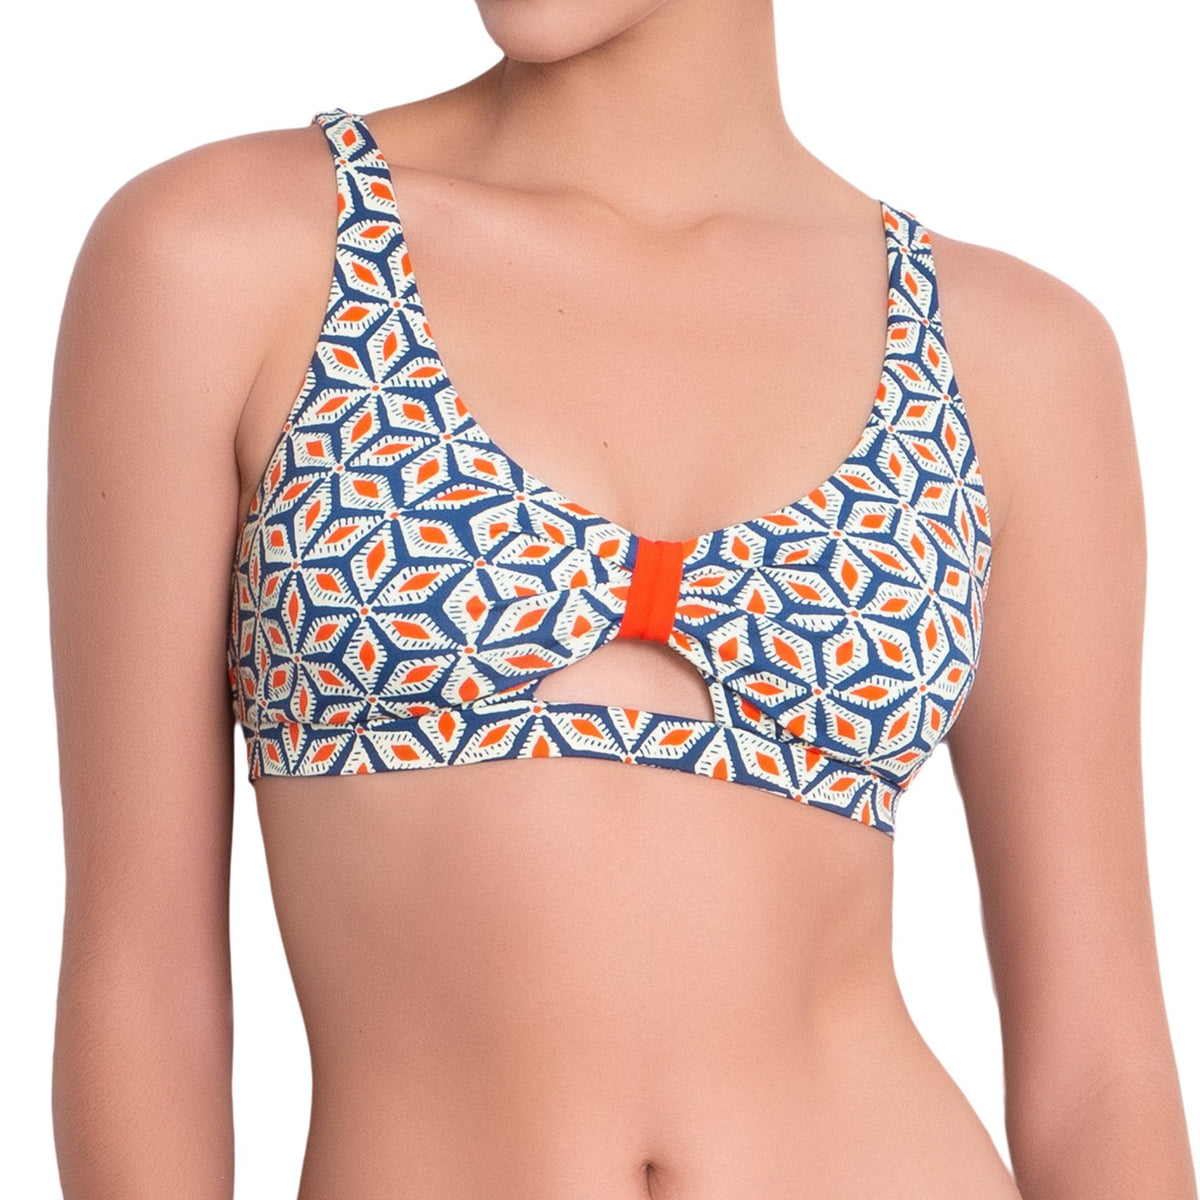 B√âR√âNICE bralette bra, printed bikini top by ALMA swimwear ‚Äì front view 2